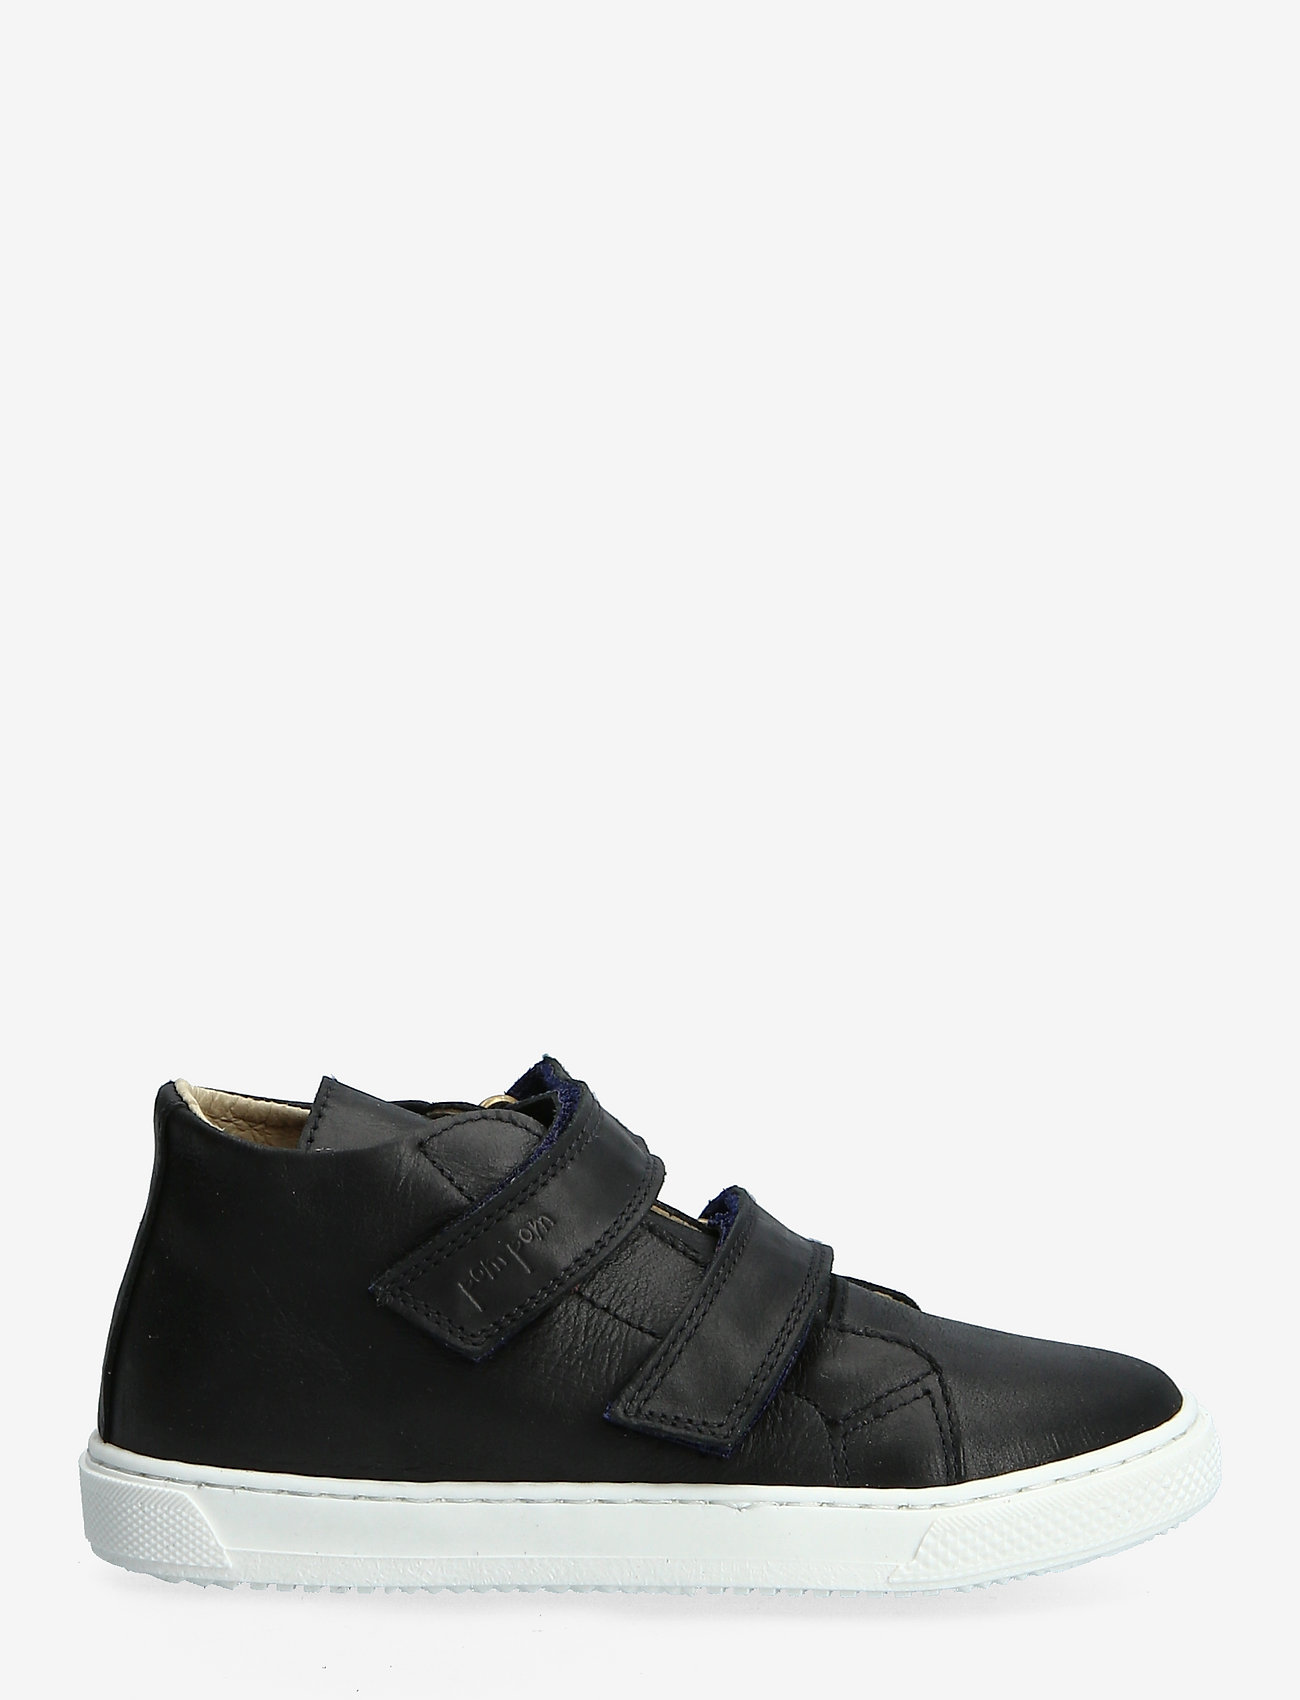 Pom Pom - Velcro High Top Sneaker - za kostkę - black negro - 1